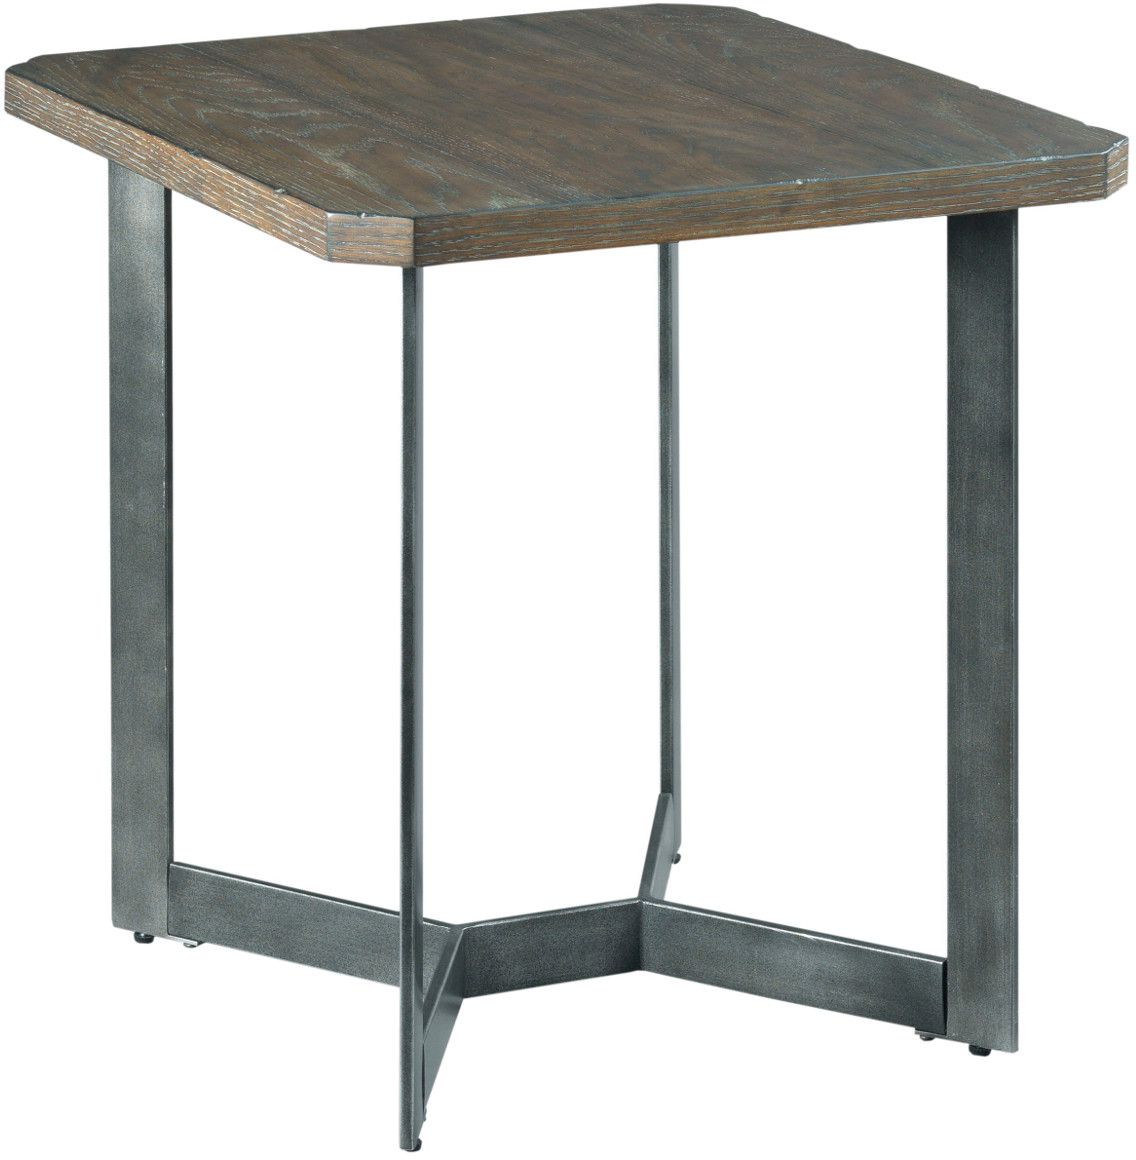 England Furniture Benton Rectangular End Table